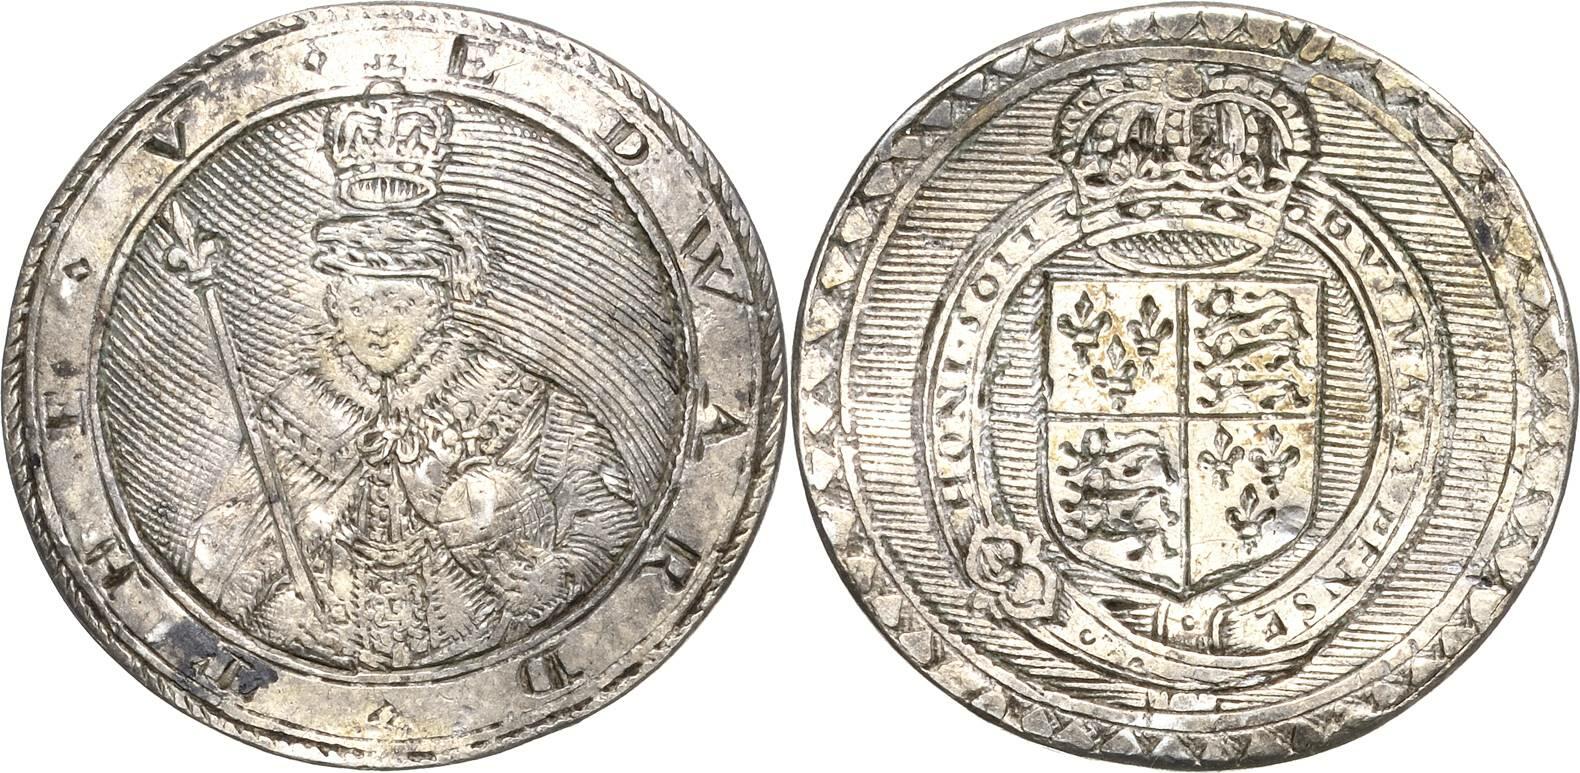 40.150.210: Europe - Great Britain - Edward V, 1483